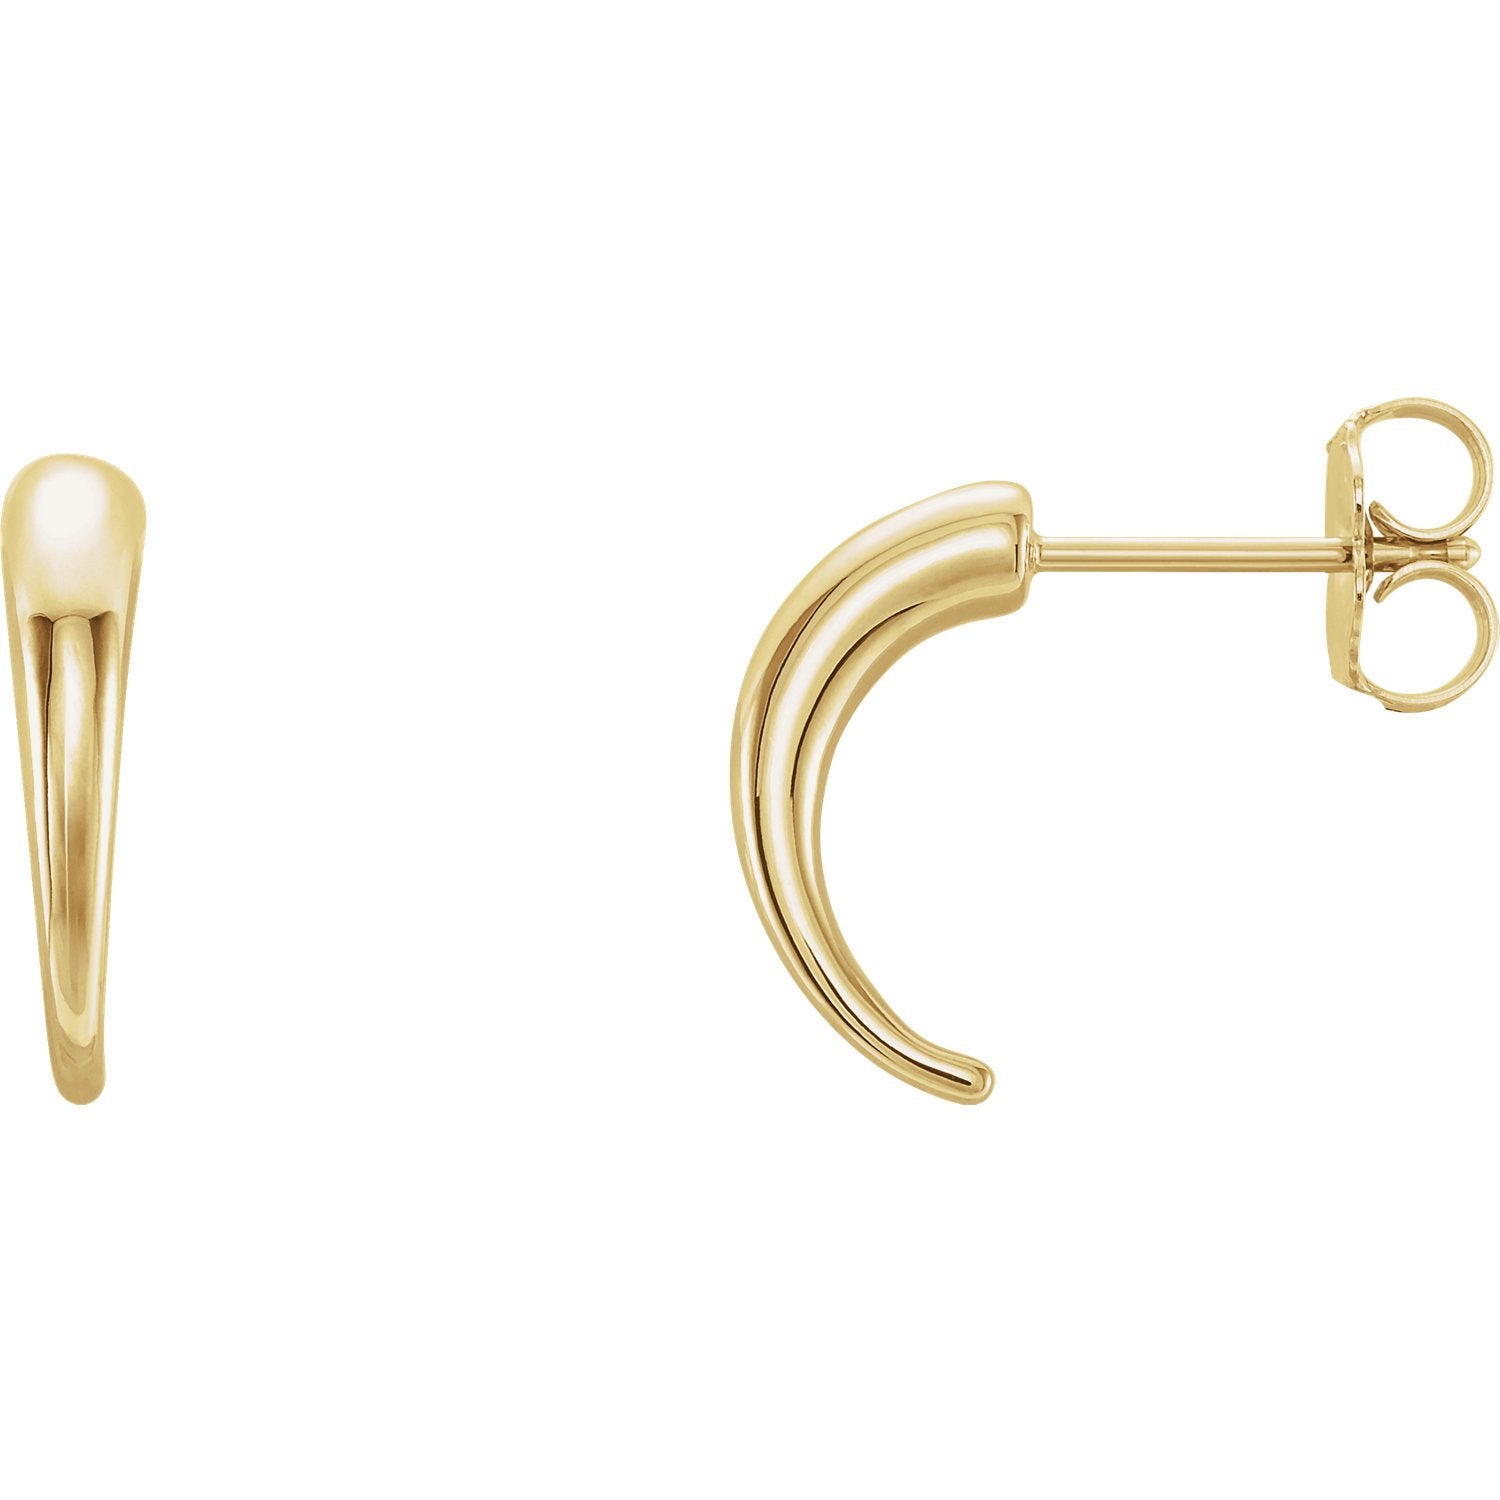 Horn Shaped J-Hoop Earrings - 14K Yellow Gold